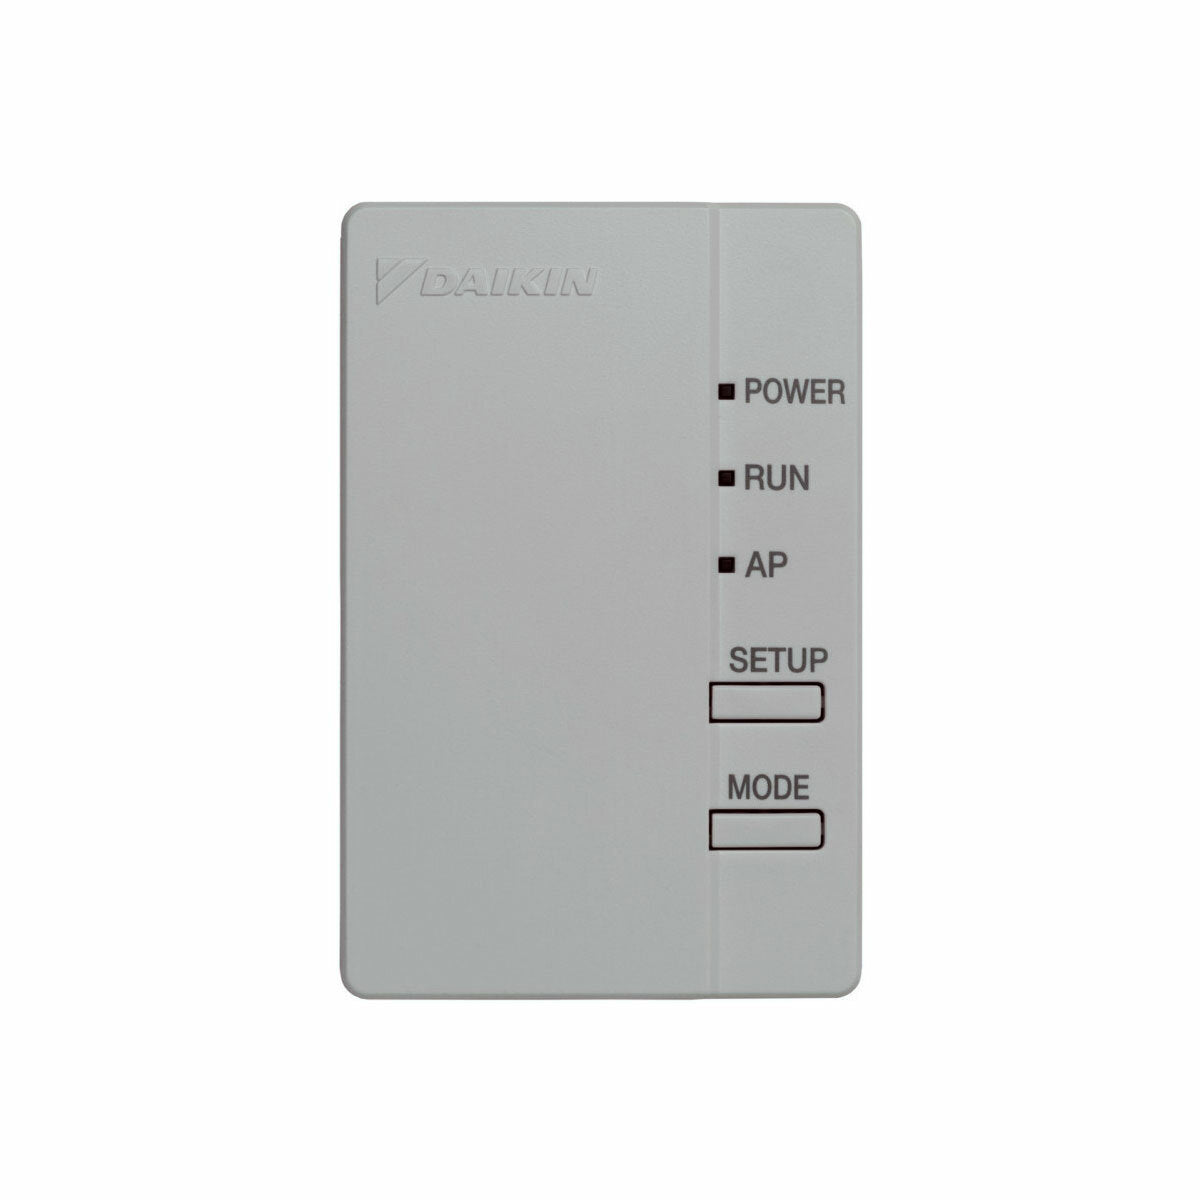 Daikin BRP069C47 wi-fi module for Sensira E Series air conditioners